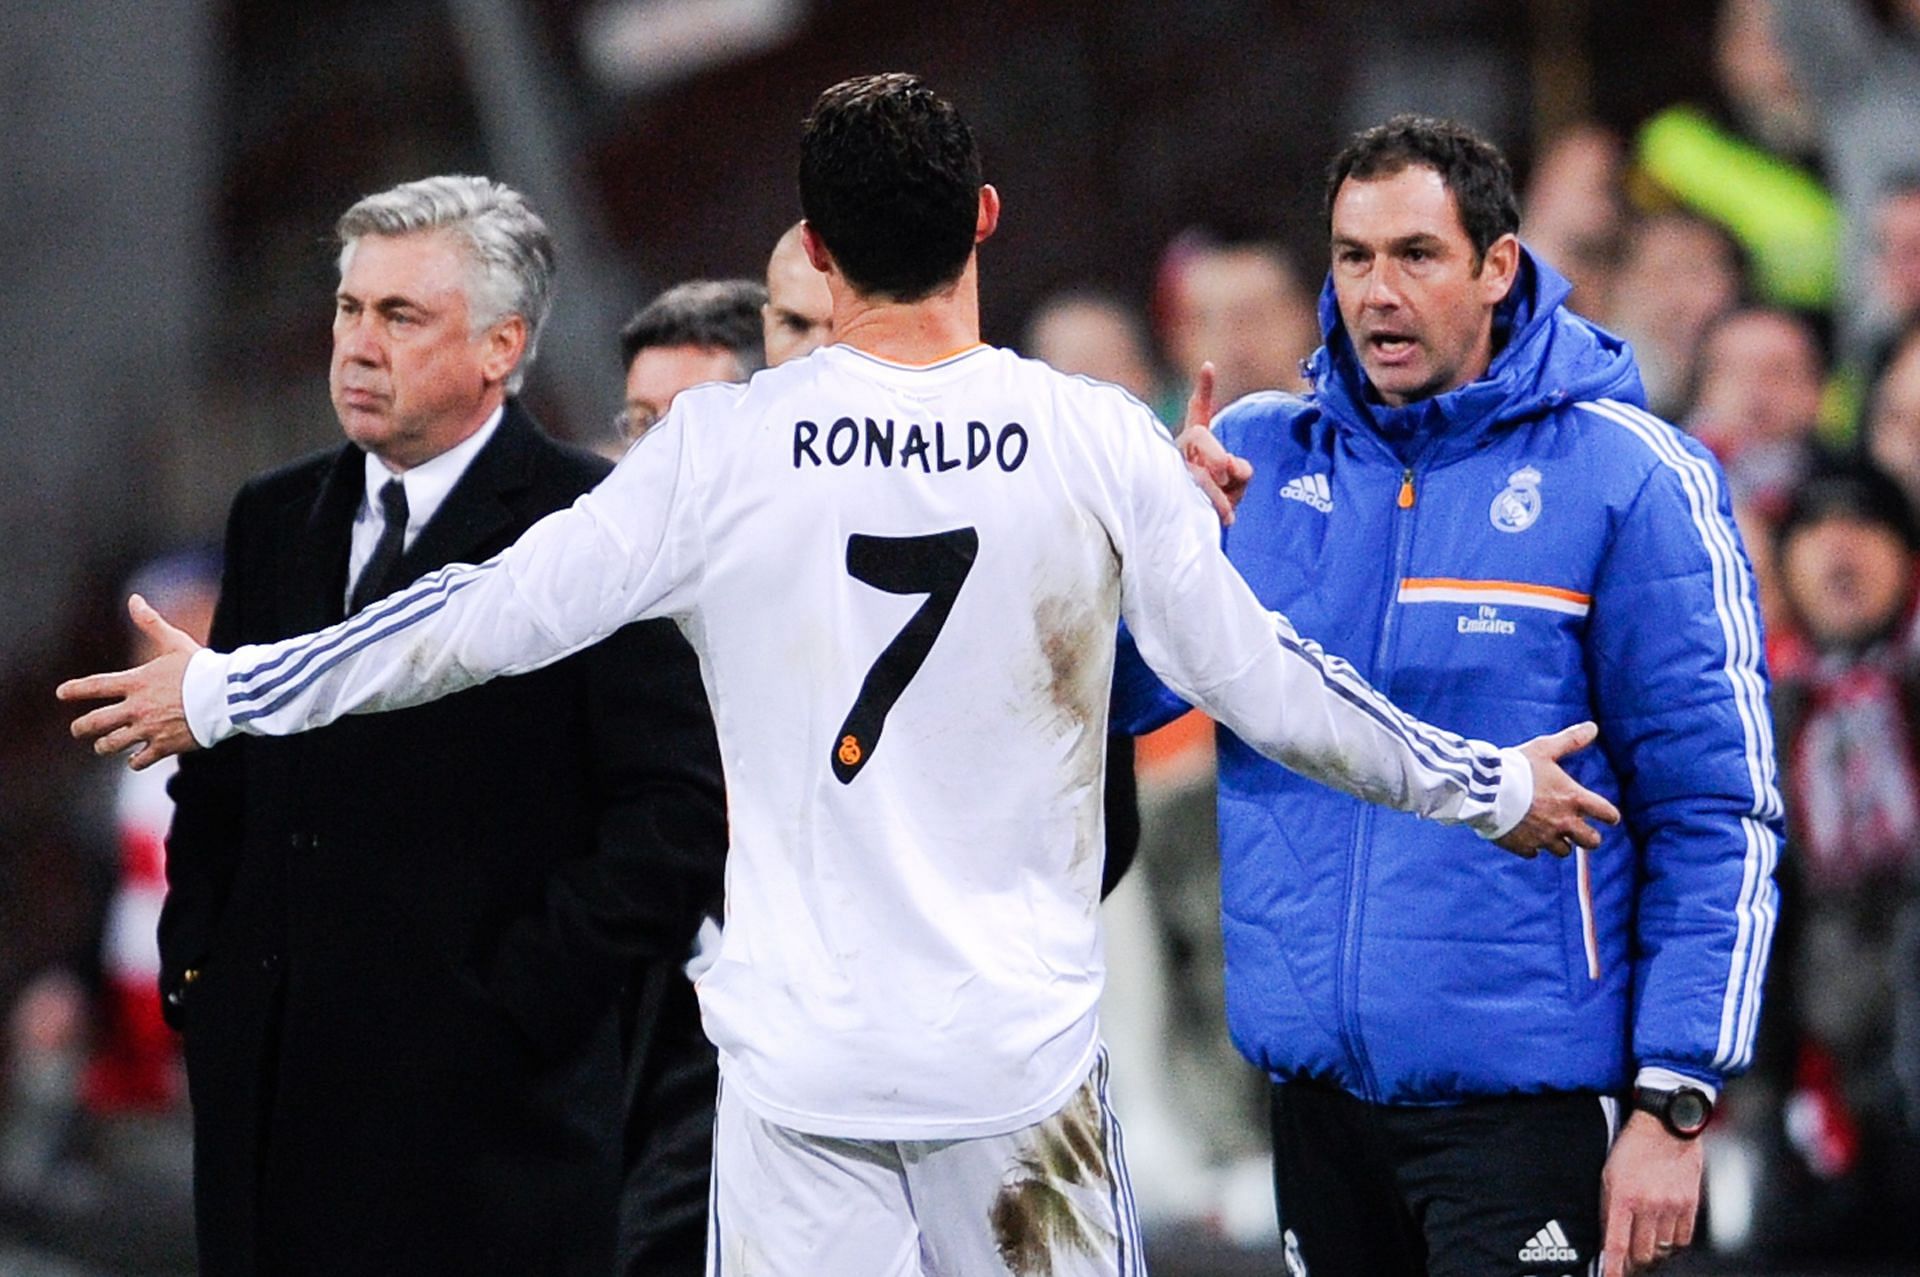 Carlo Ancelotti has previously coached Cristiano Ronaldo at Real Madrid.